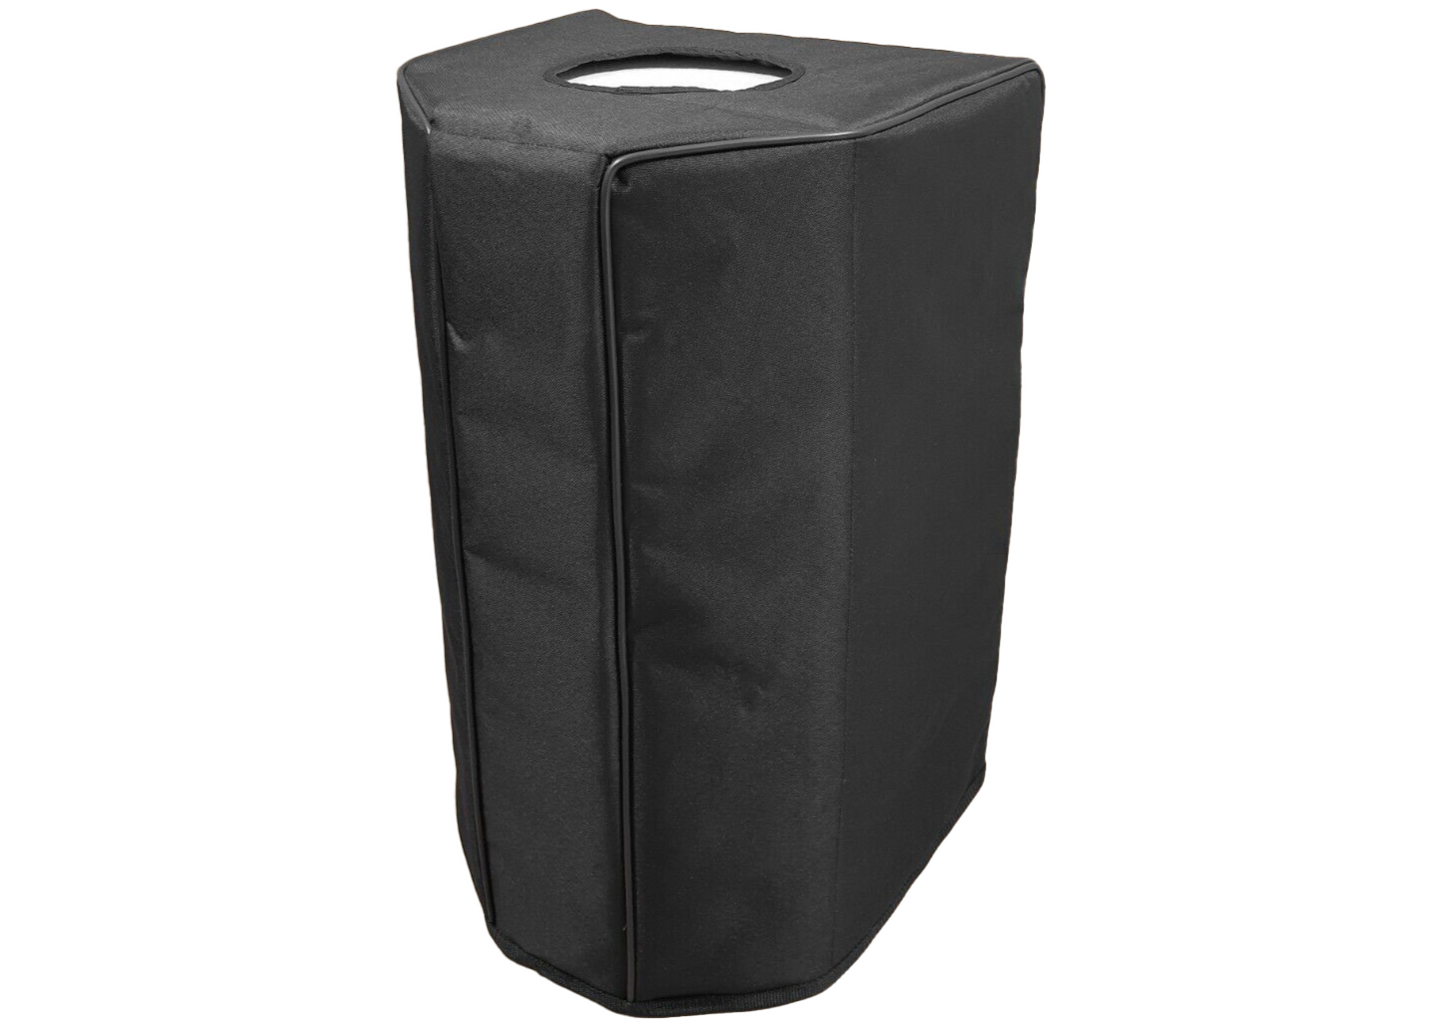 Custom padded cover for RCF Art 910-A Active Speaker